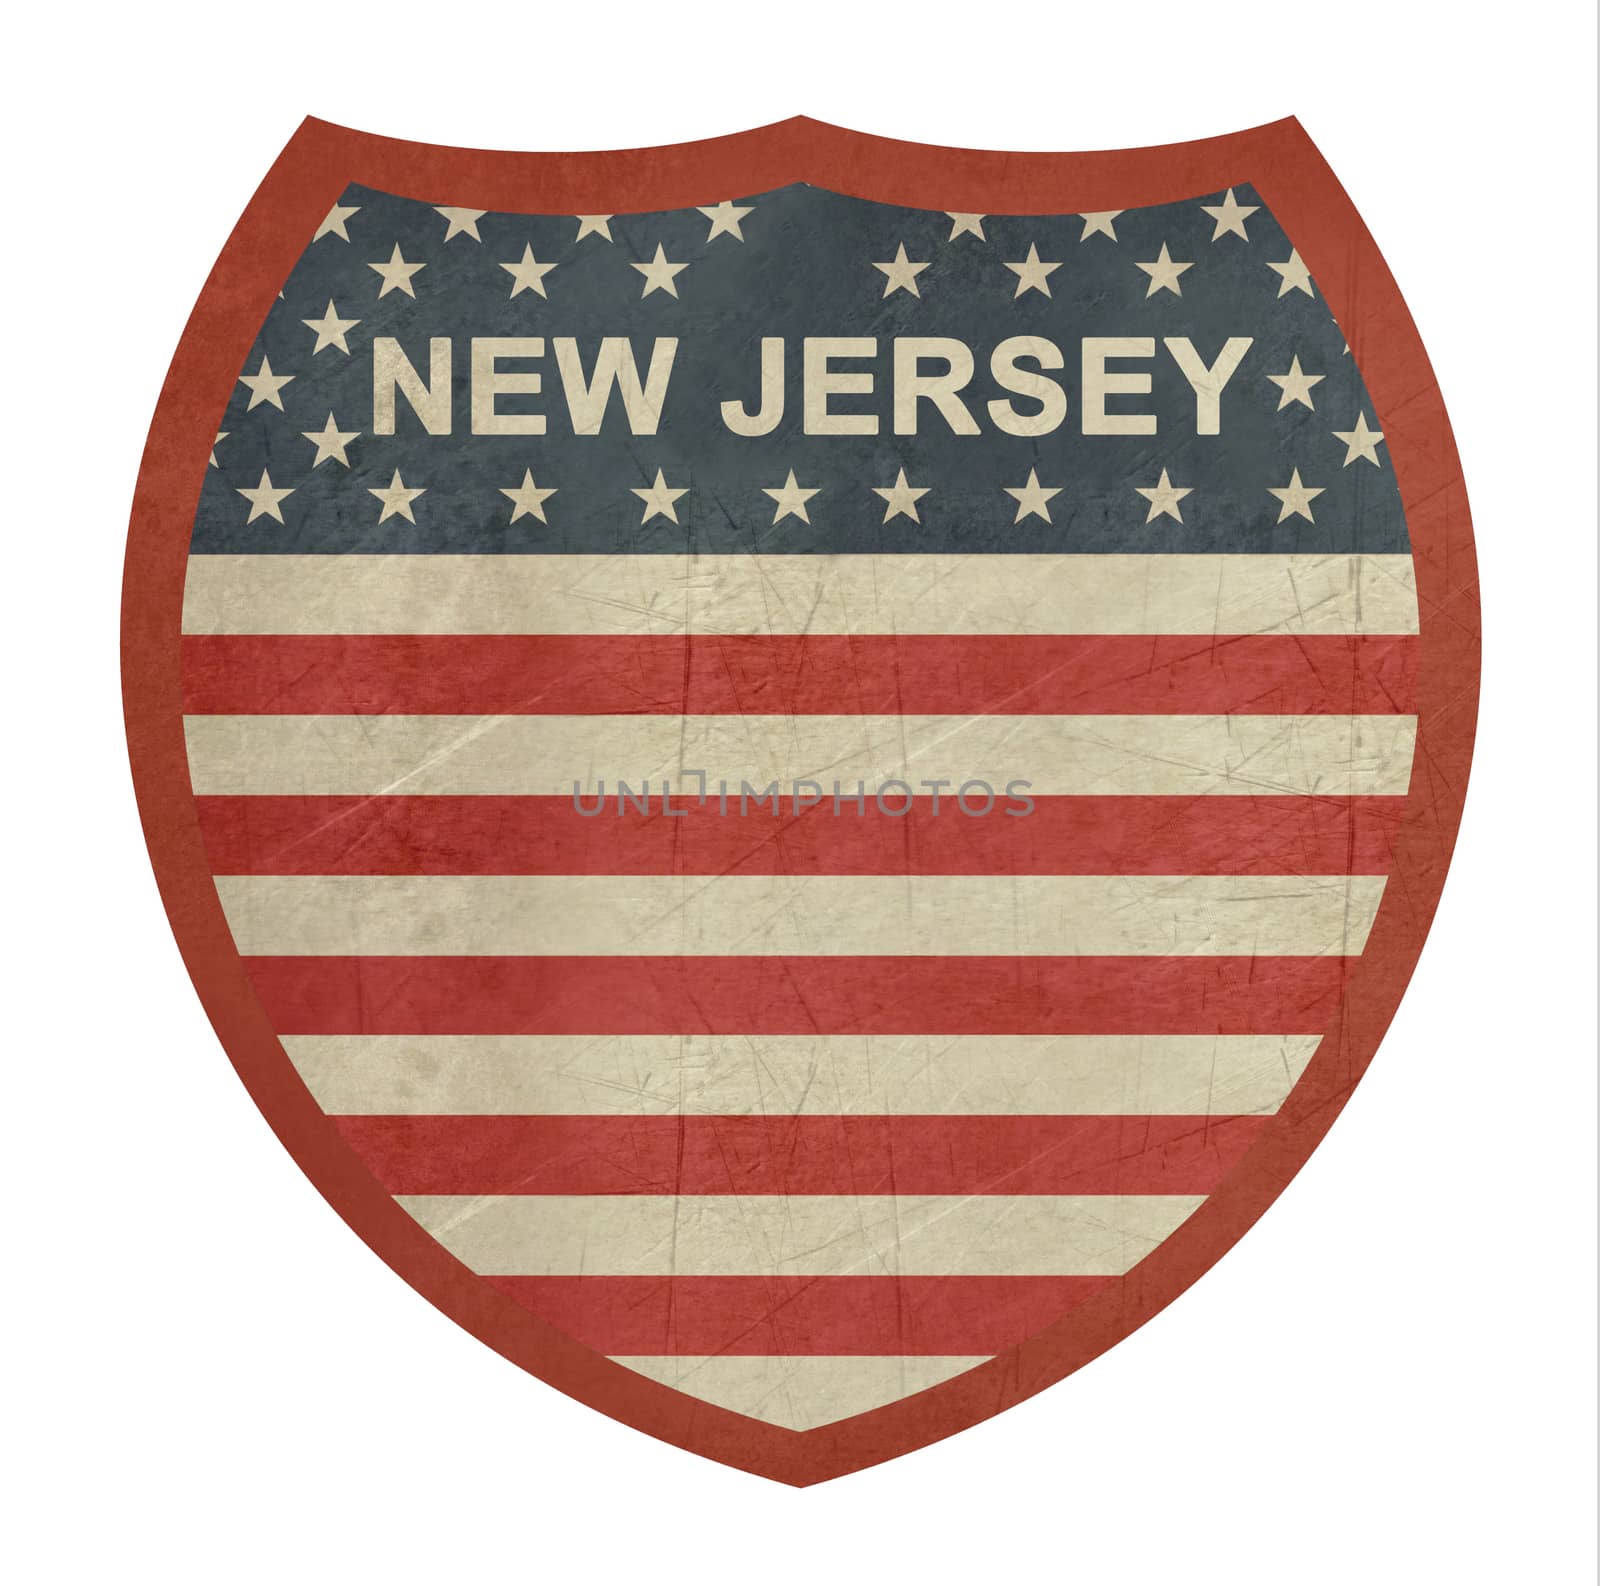 Grunge New Jersey American interstate highway sign by speedfighter